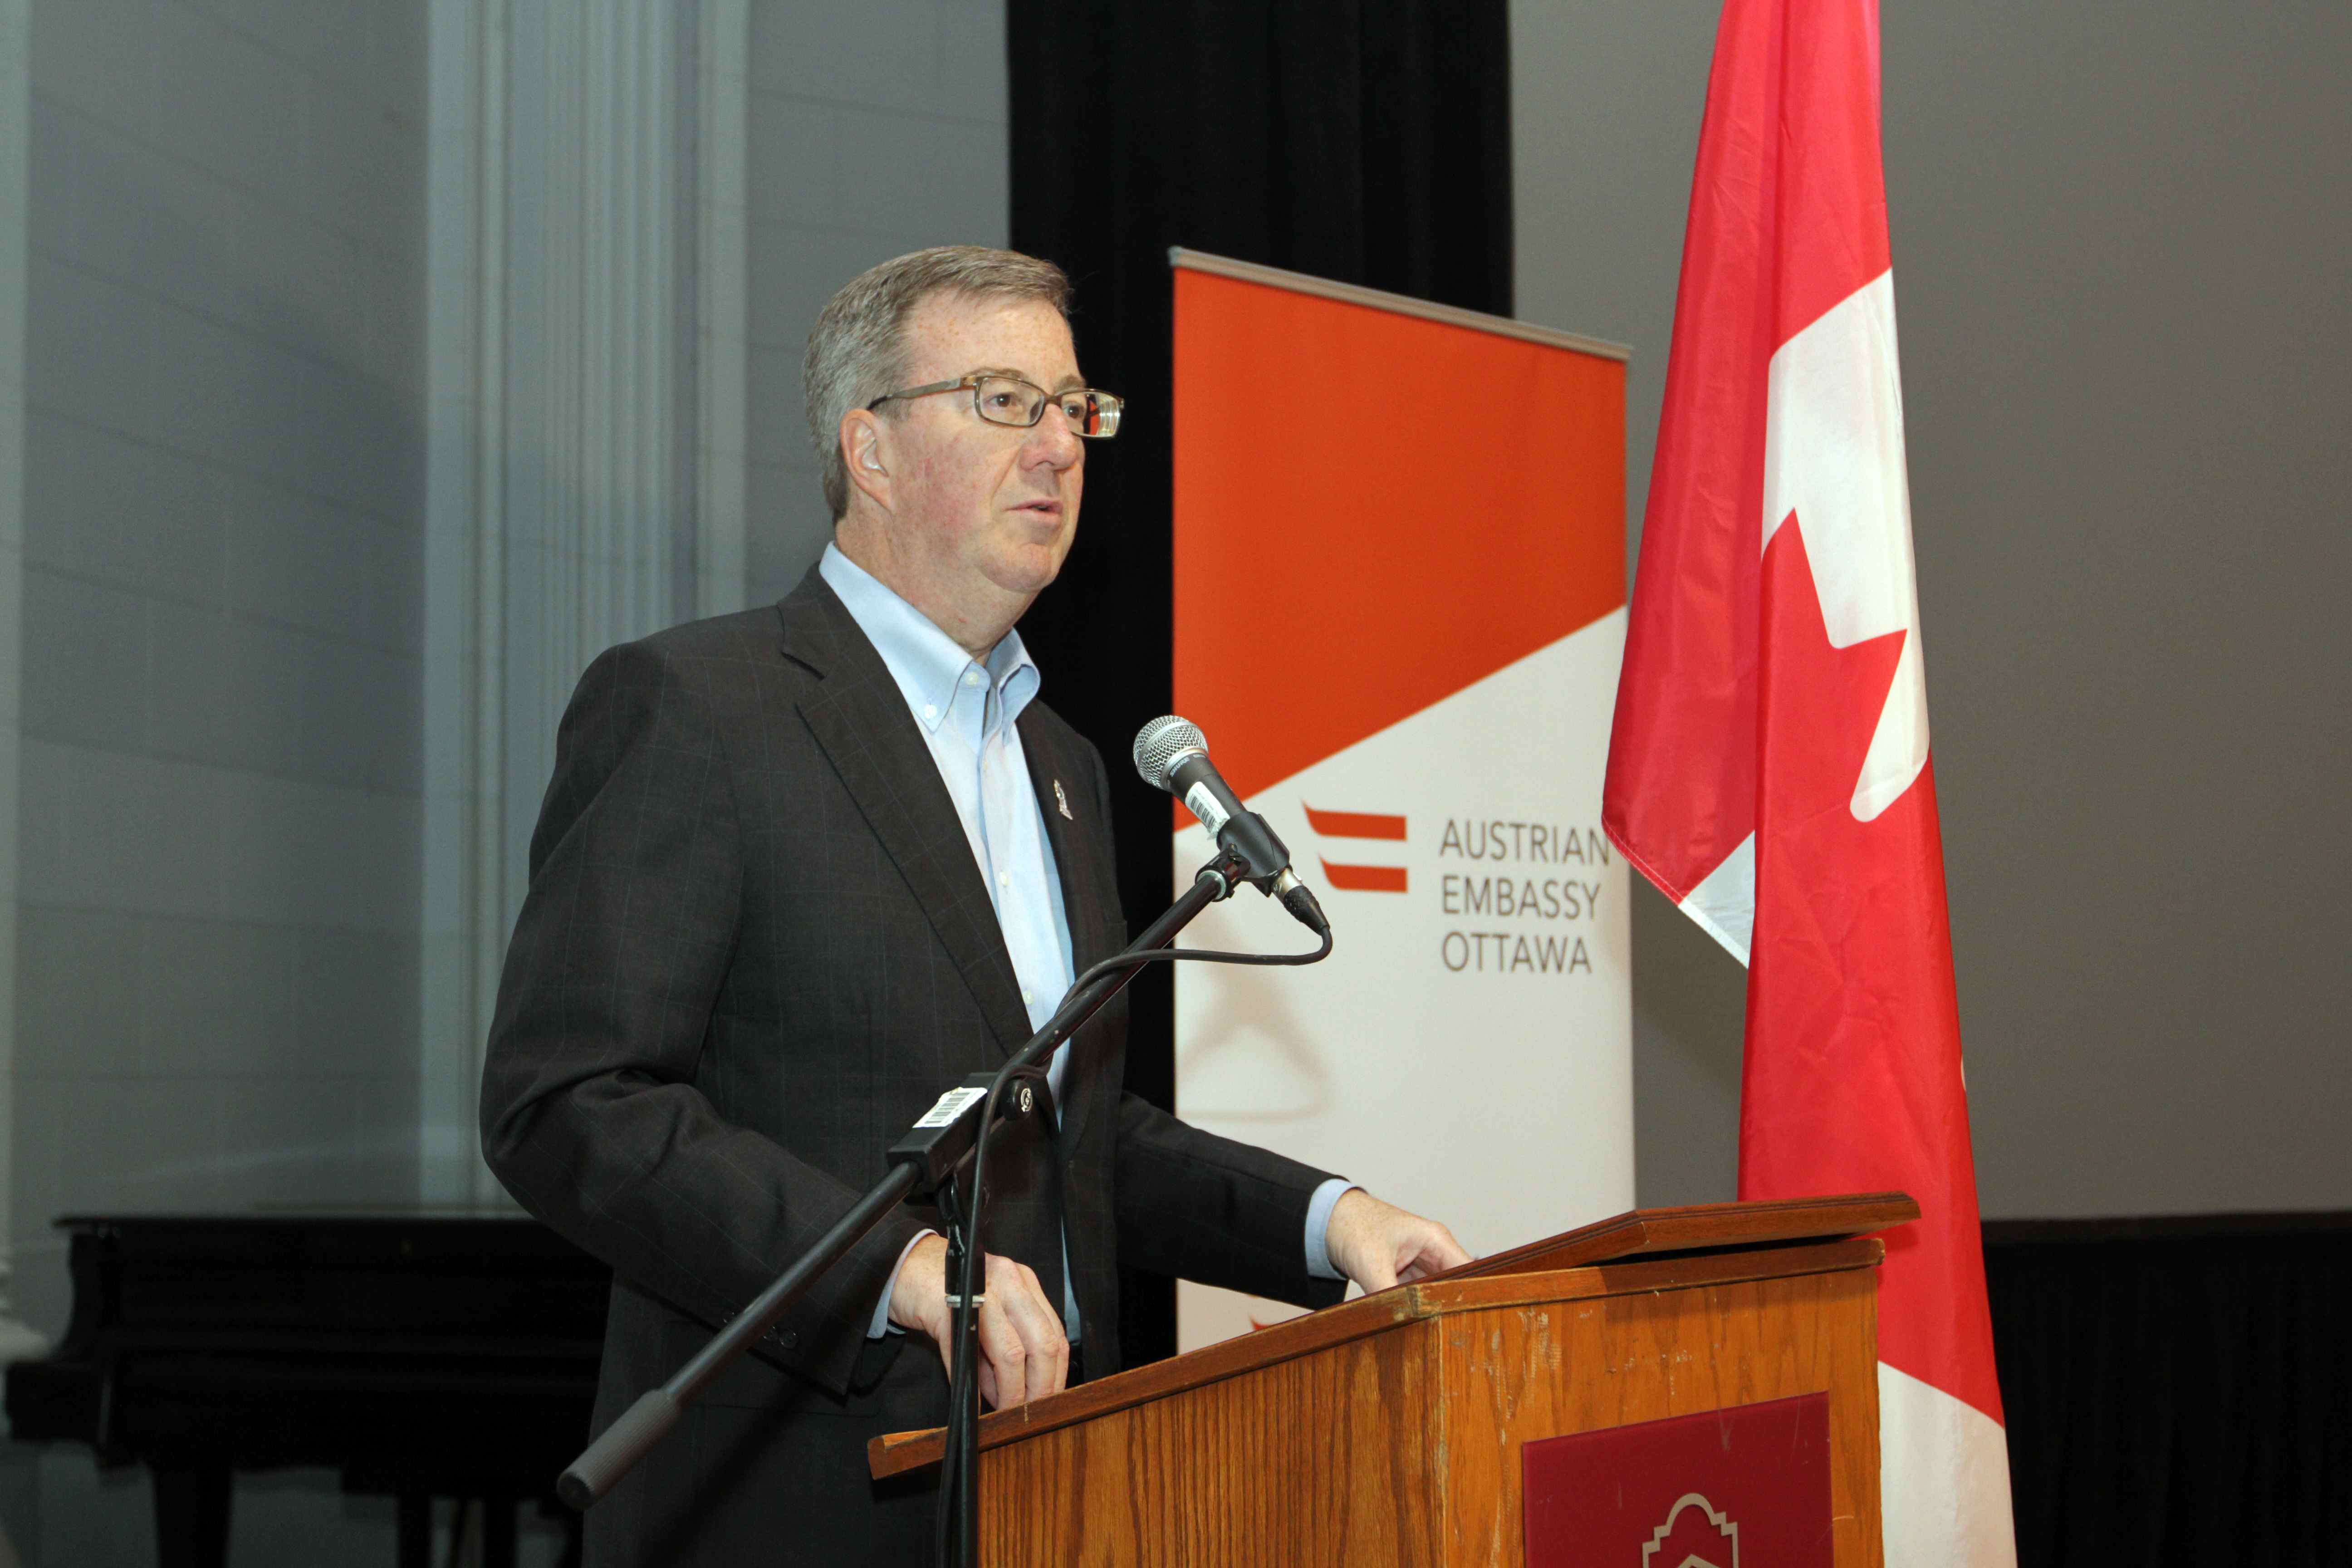 Mayor Watson proclaims Austrian Week in Ottawa